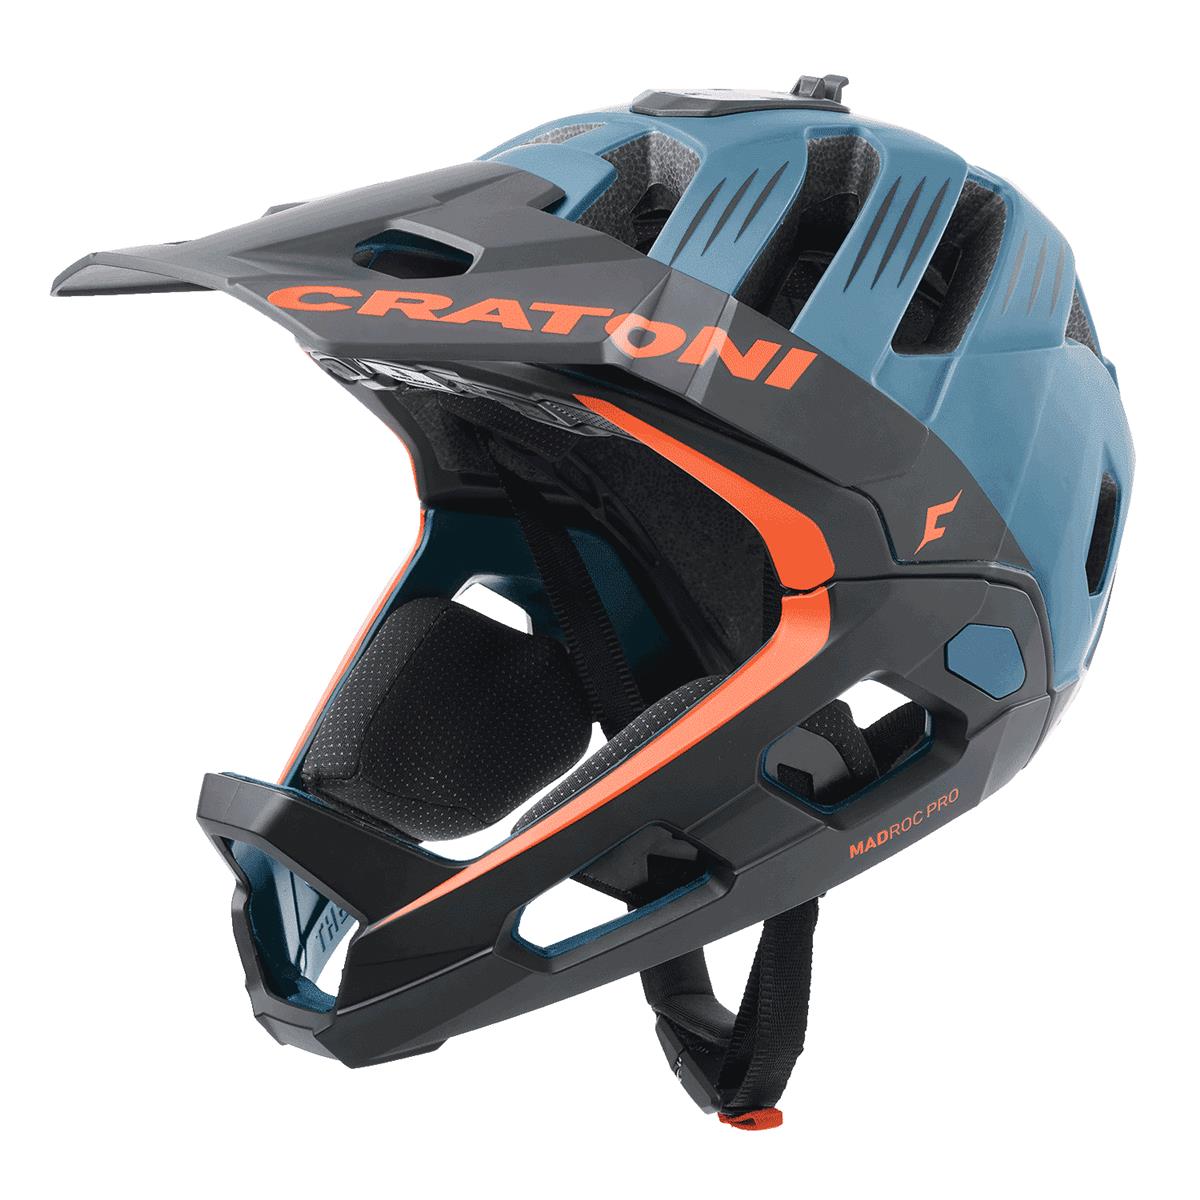 Madroc Pro Smart helmet Bluetooth black size S/M (54-58cm)